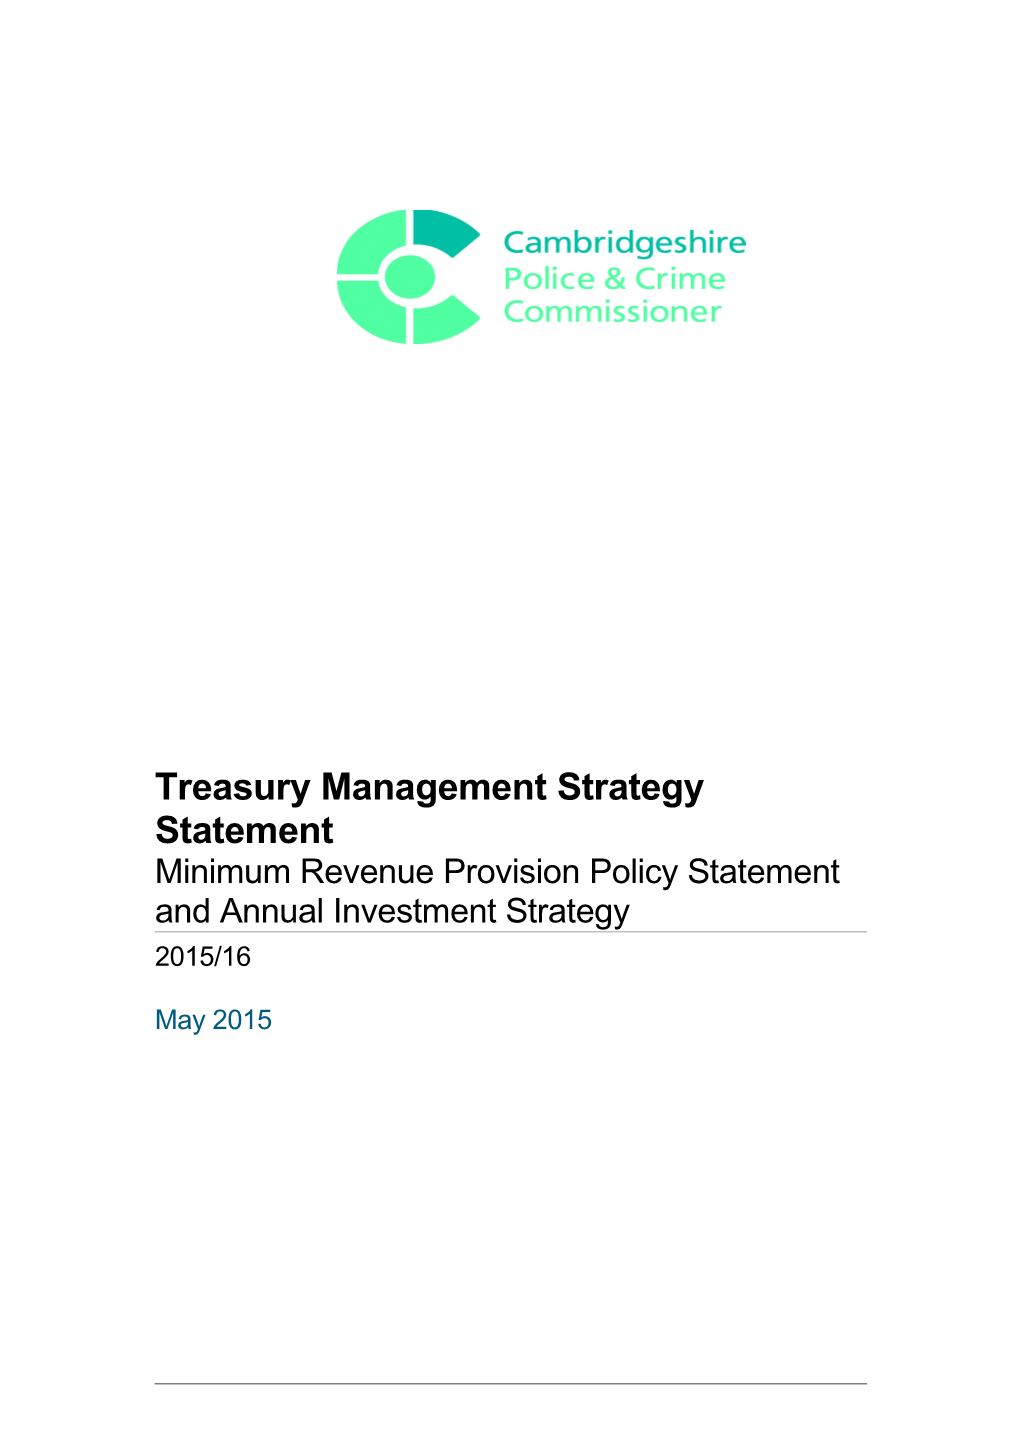 Treasury Management Strategy Statement